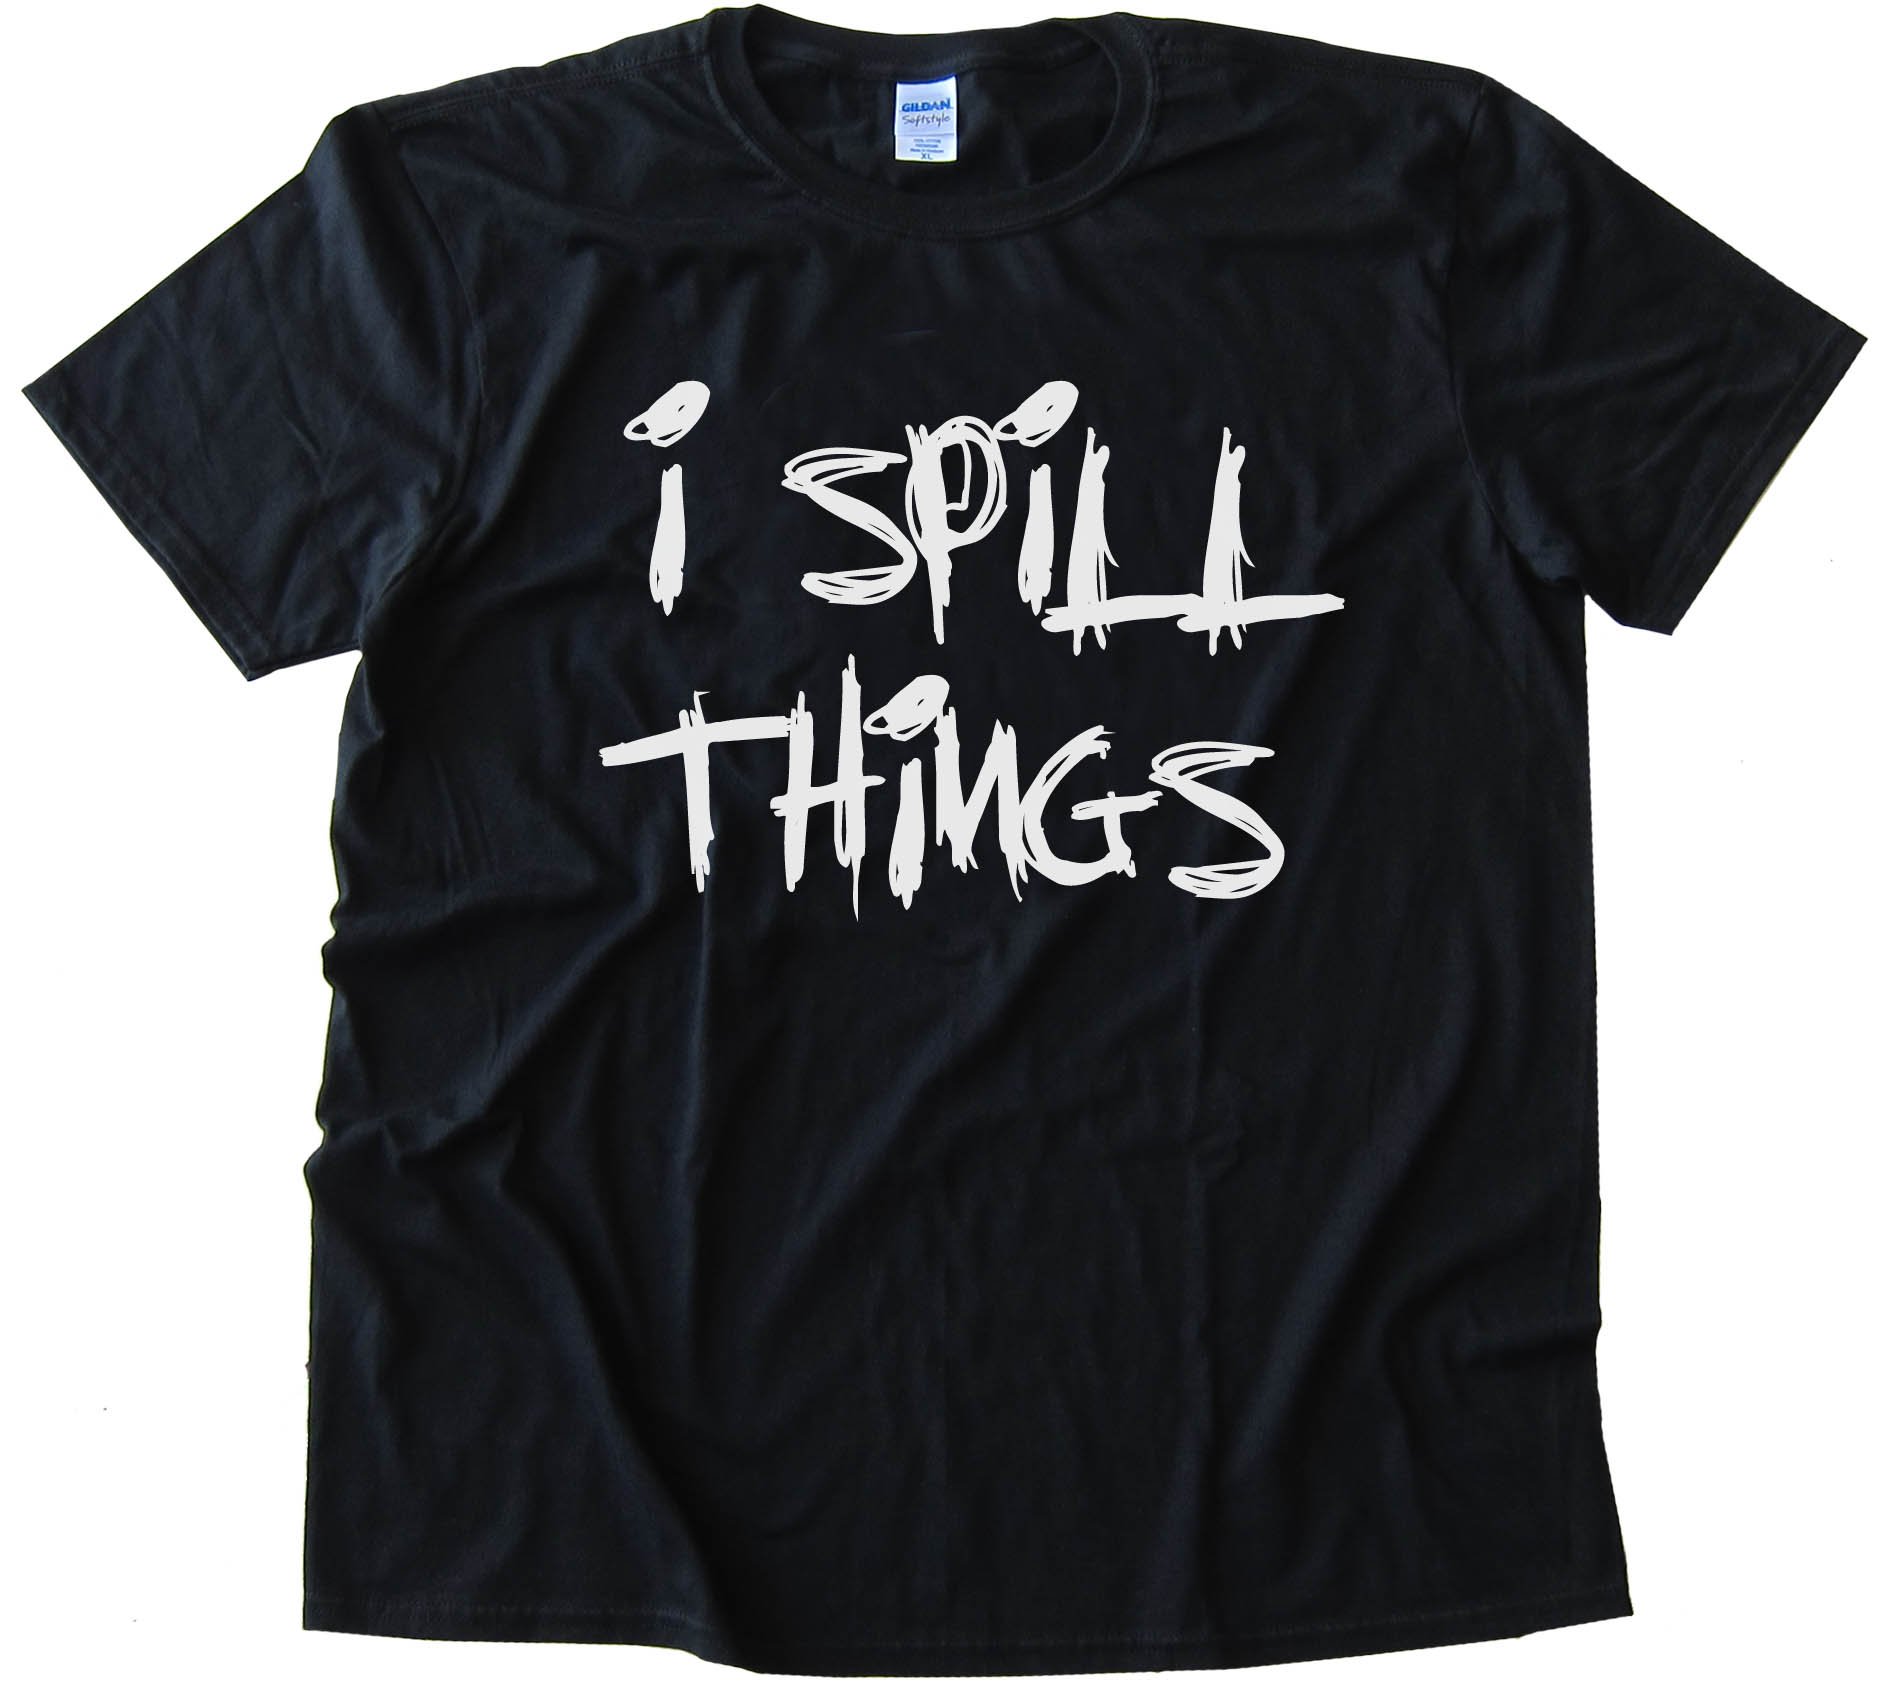 I Spill Things -Tee Shirt